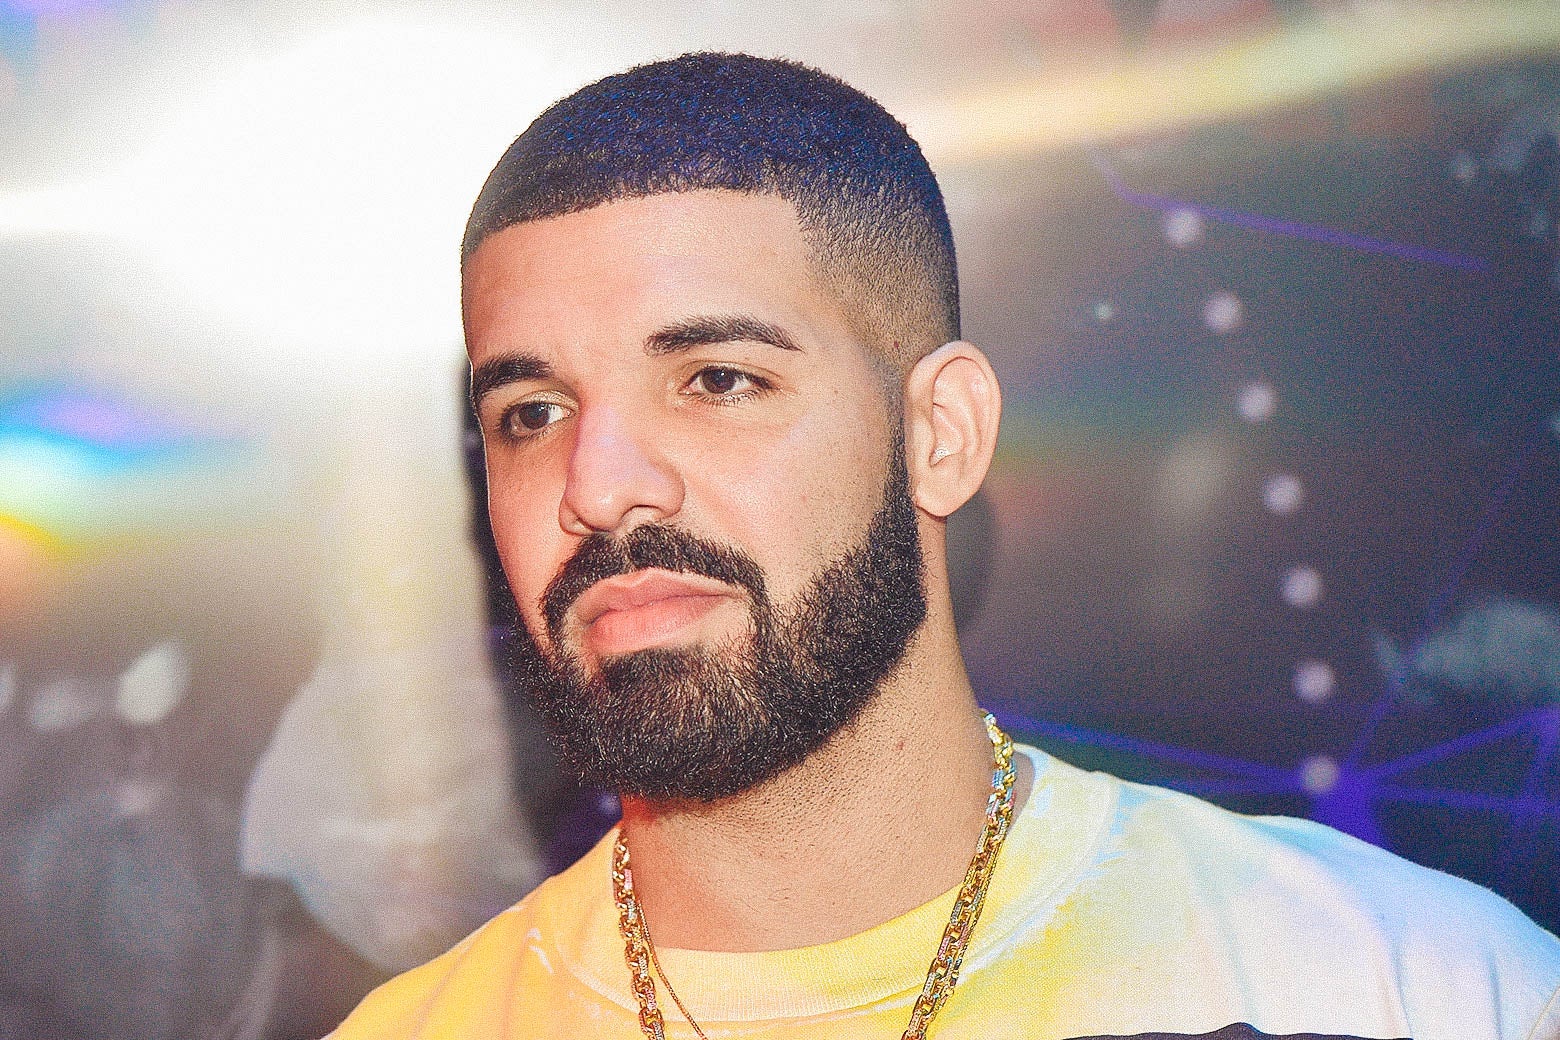 Drake in Atlanta, Georgia on May 7, 2018.